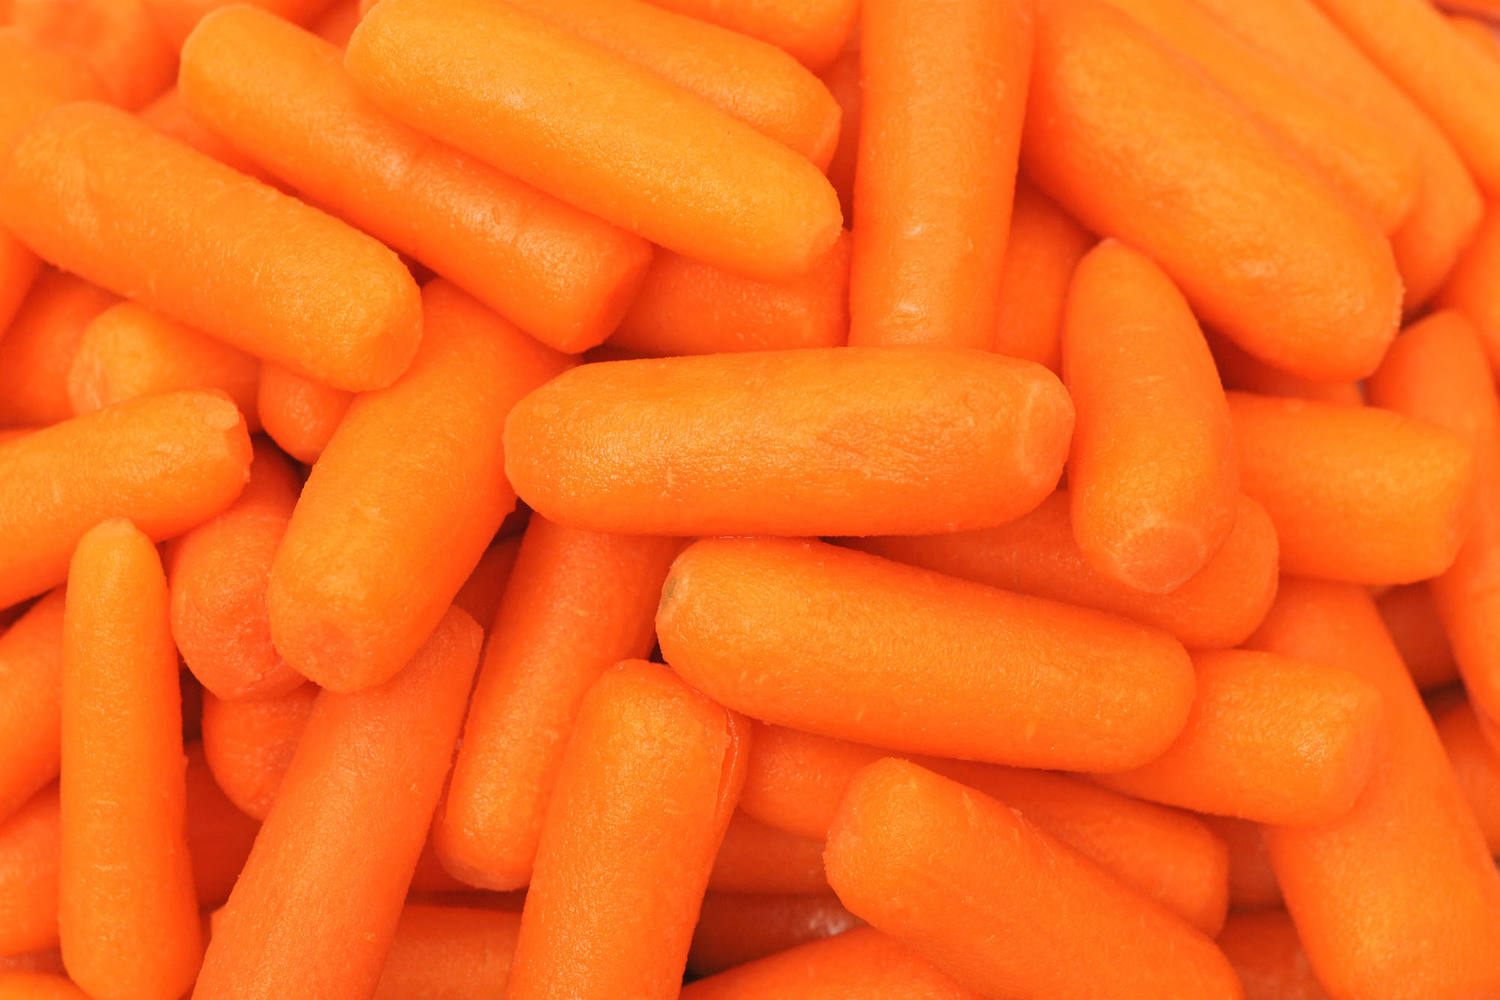 Baby carrots medium 1kg kist 8 stuks 3